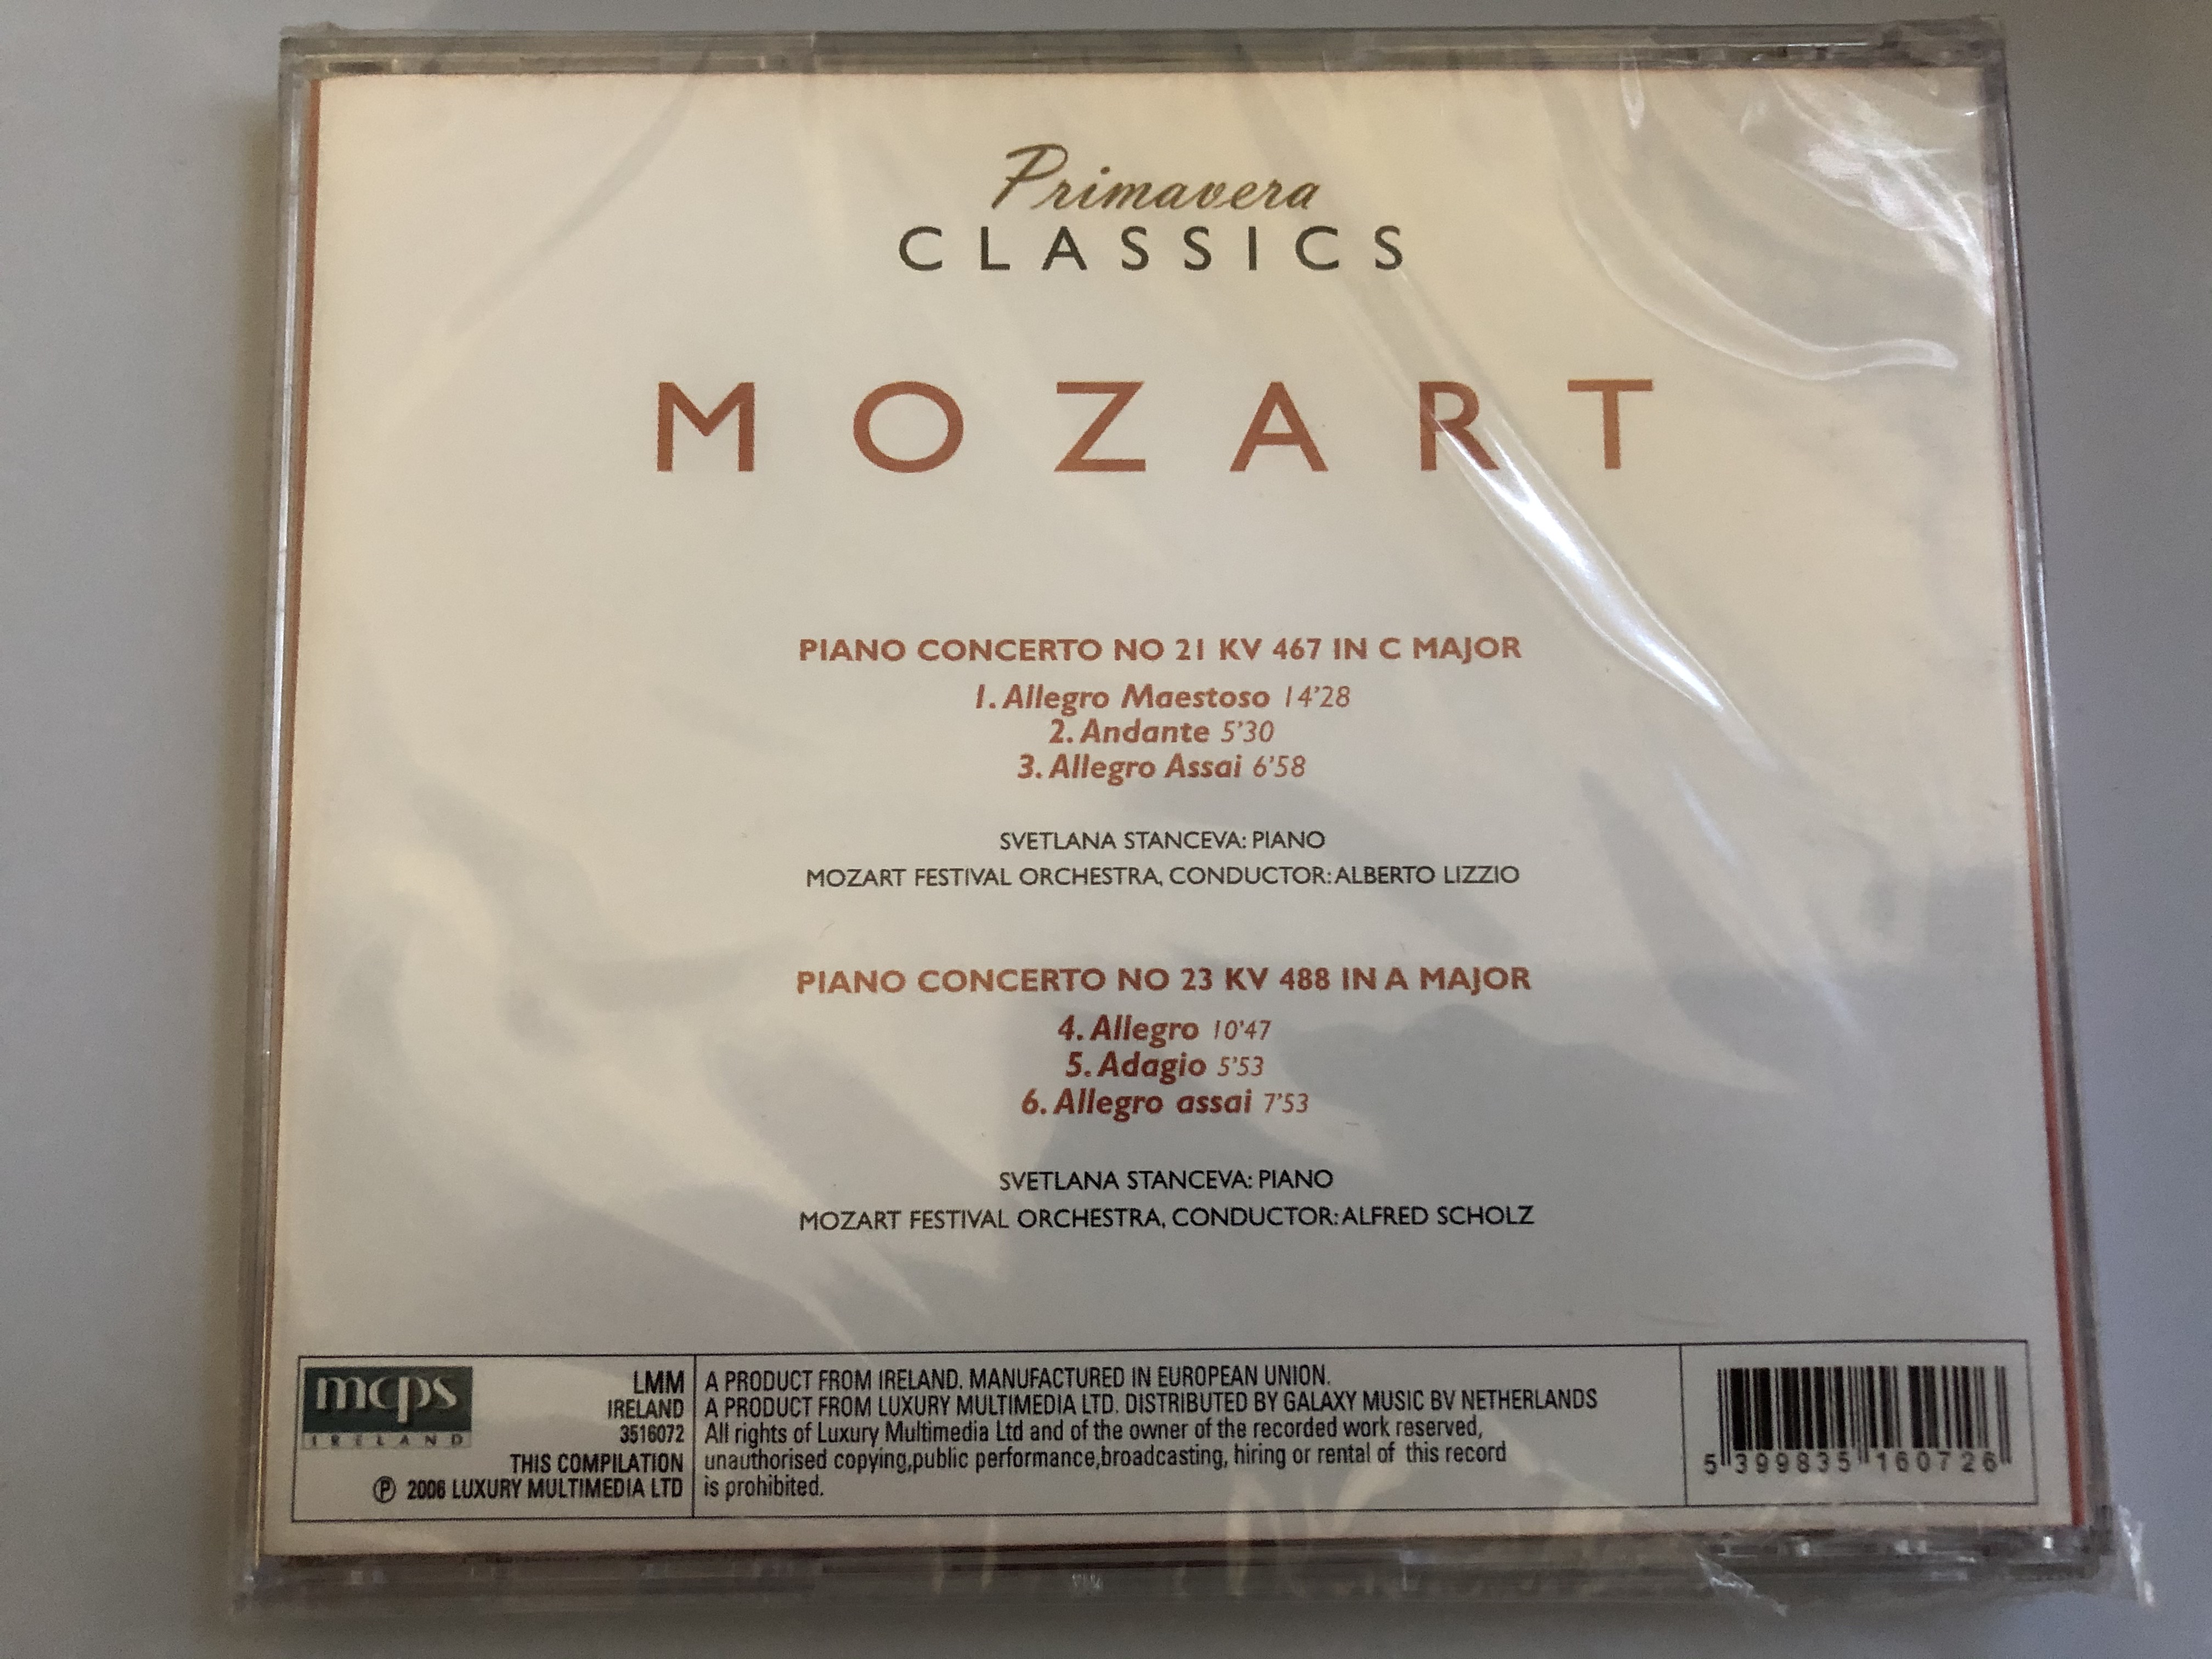 primavera-classics-mozart-pianoconcertos-no-21-23-svetlana-stanceva-mozart-festival-orchestra-alfred-scholz-alberta-lizzia-luxury-multimedia-audio-cd-2006-3516072-2-.jpg